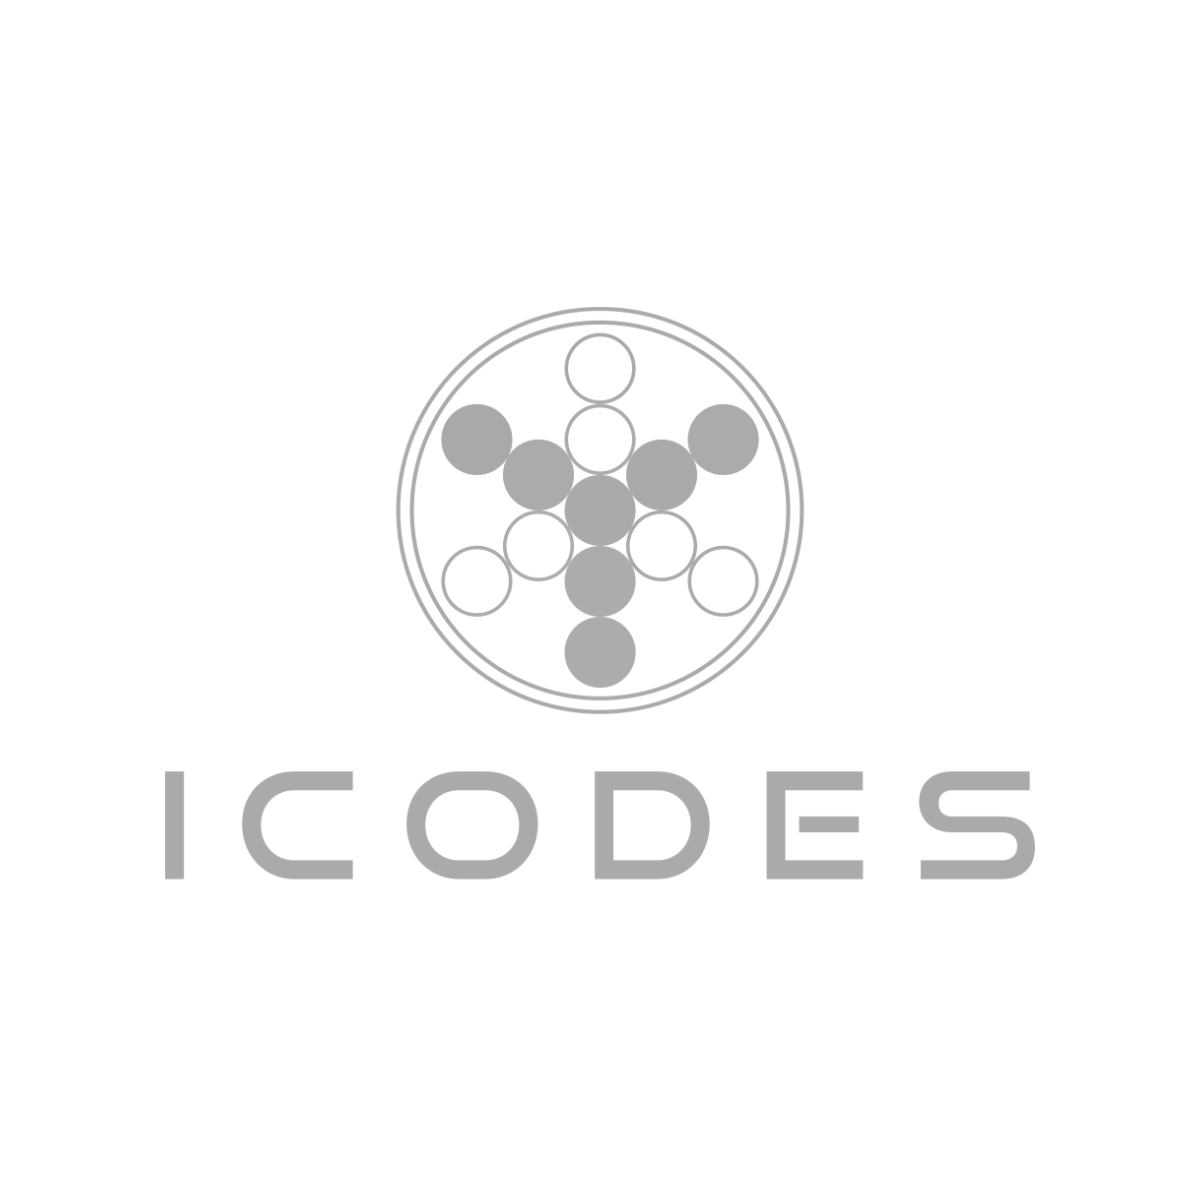 icodes